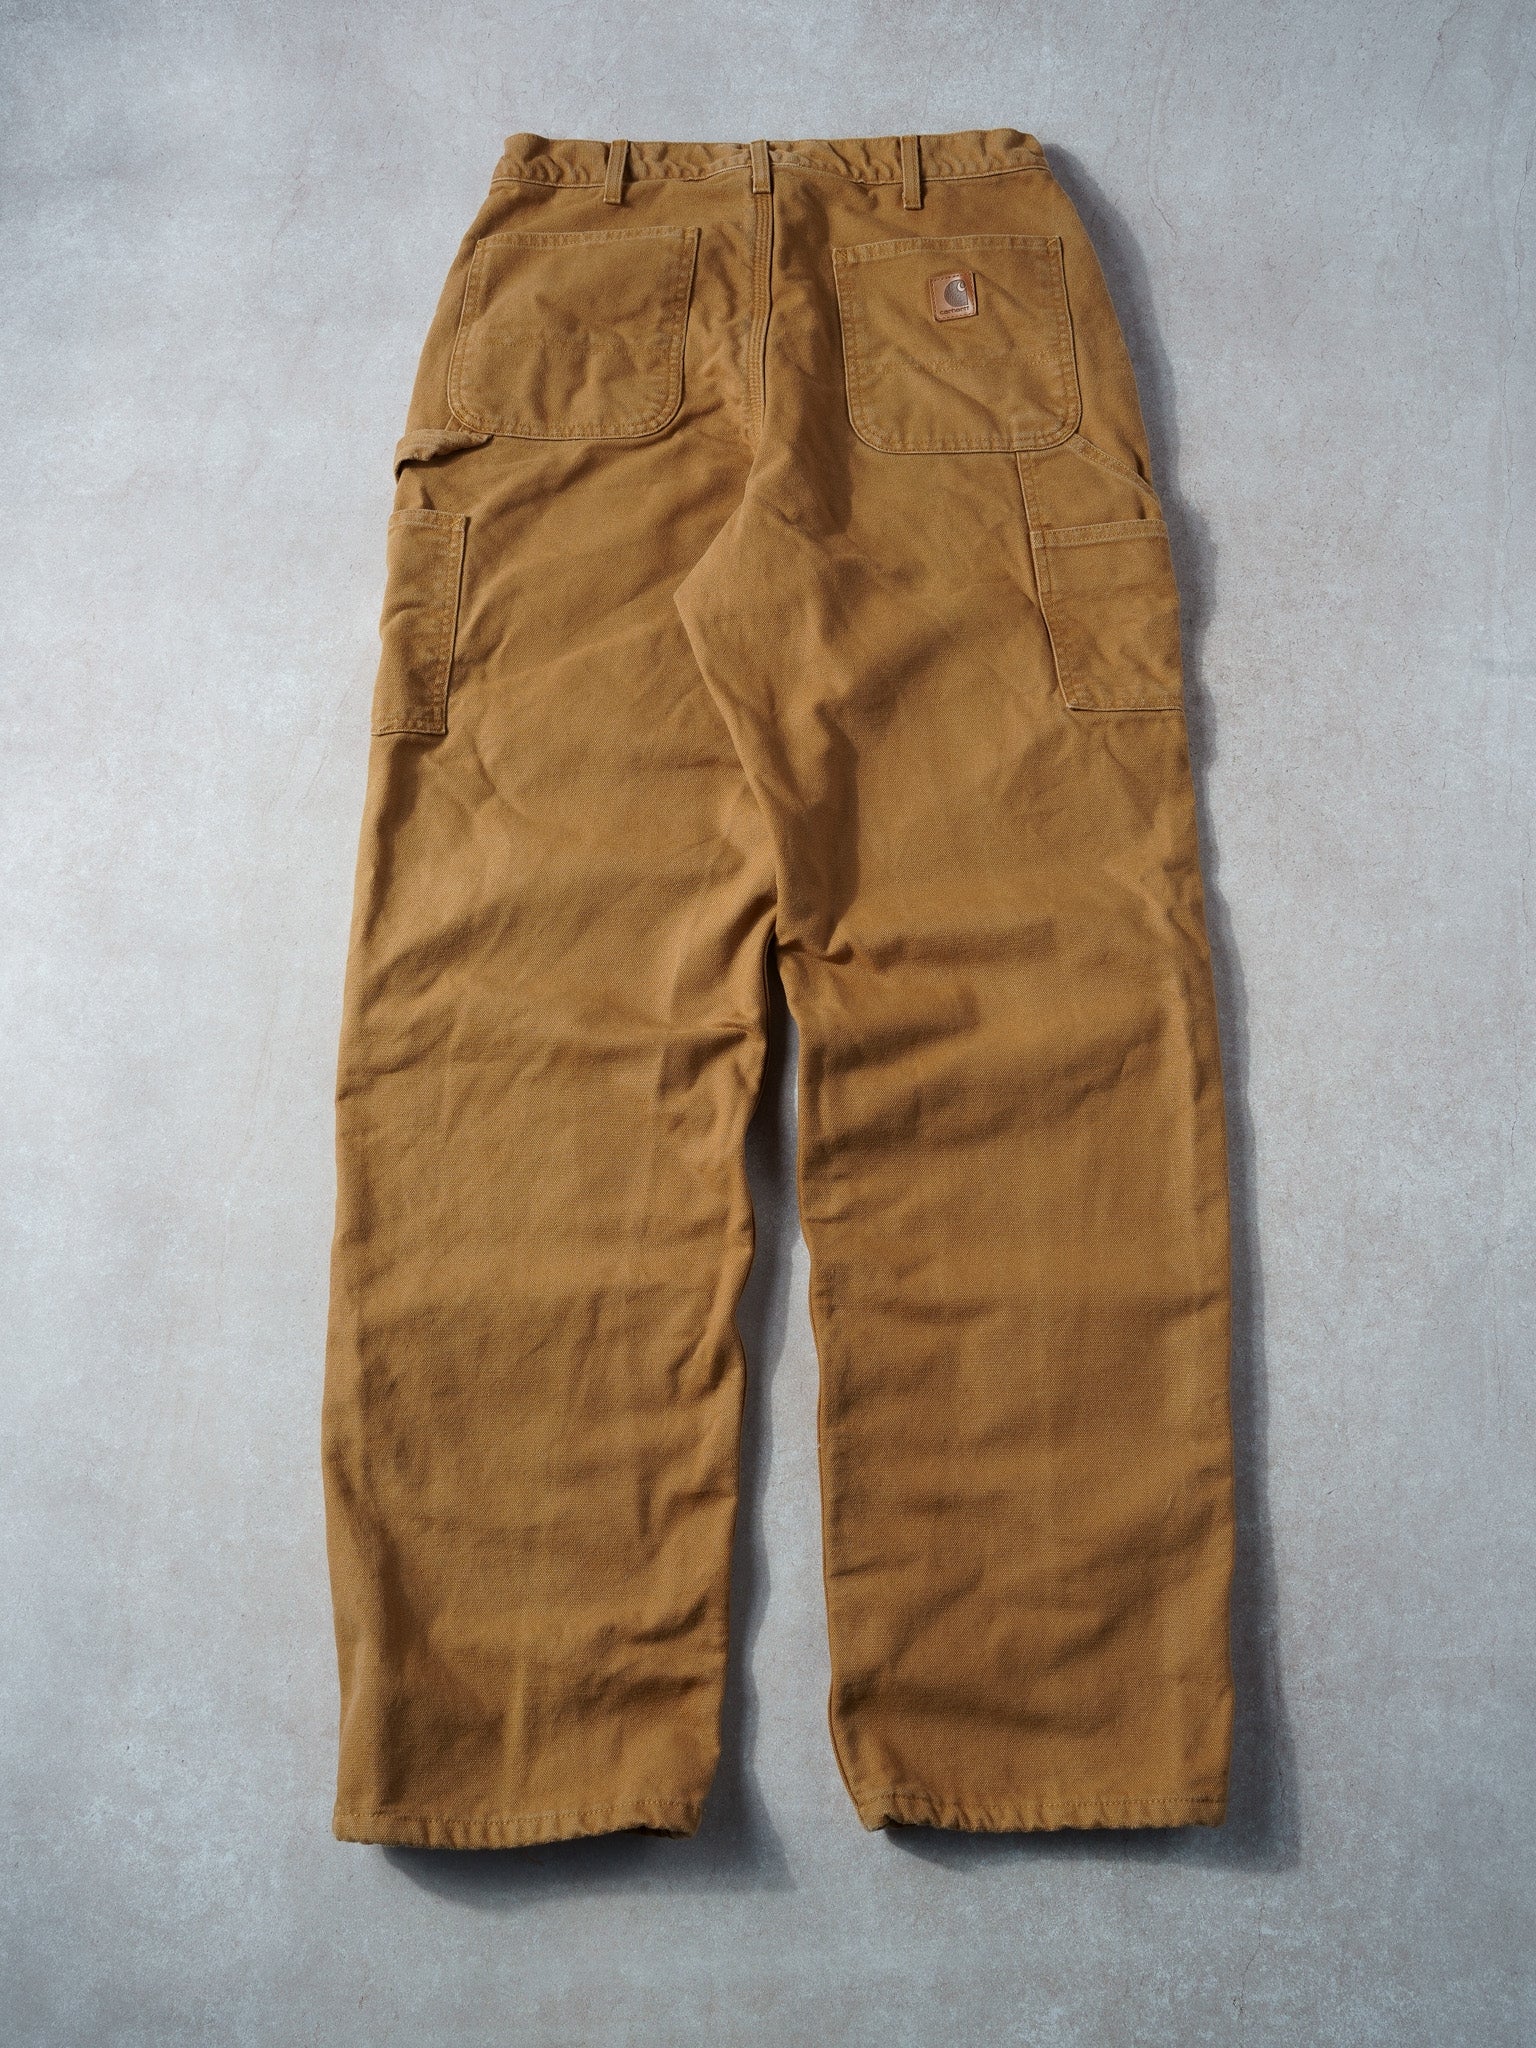 VIntage 90s Khaki Carhartt Lined Carpenter Pants (32x34)